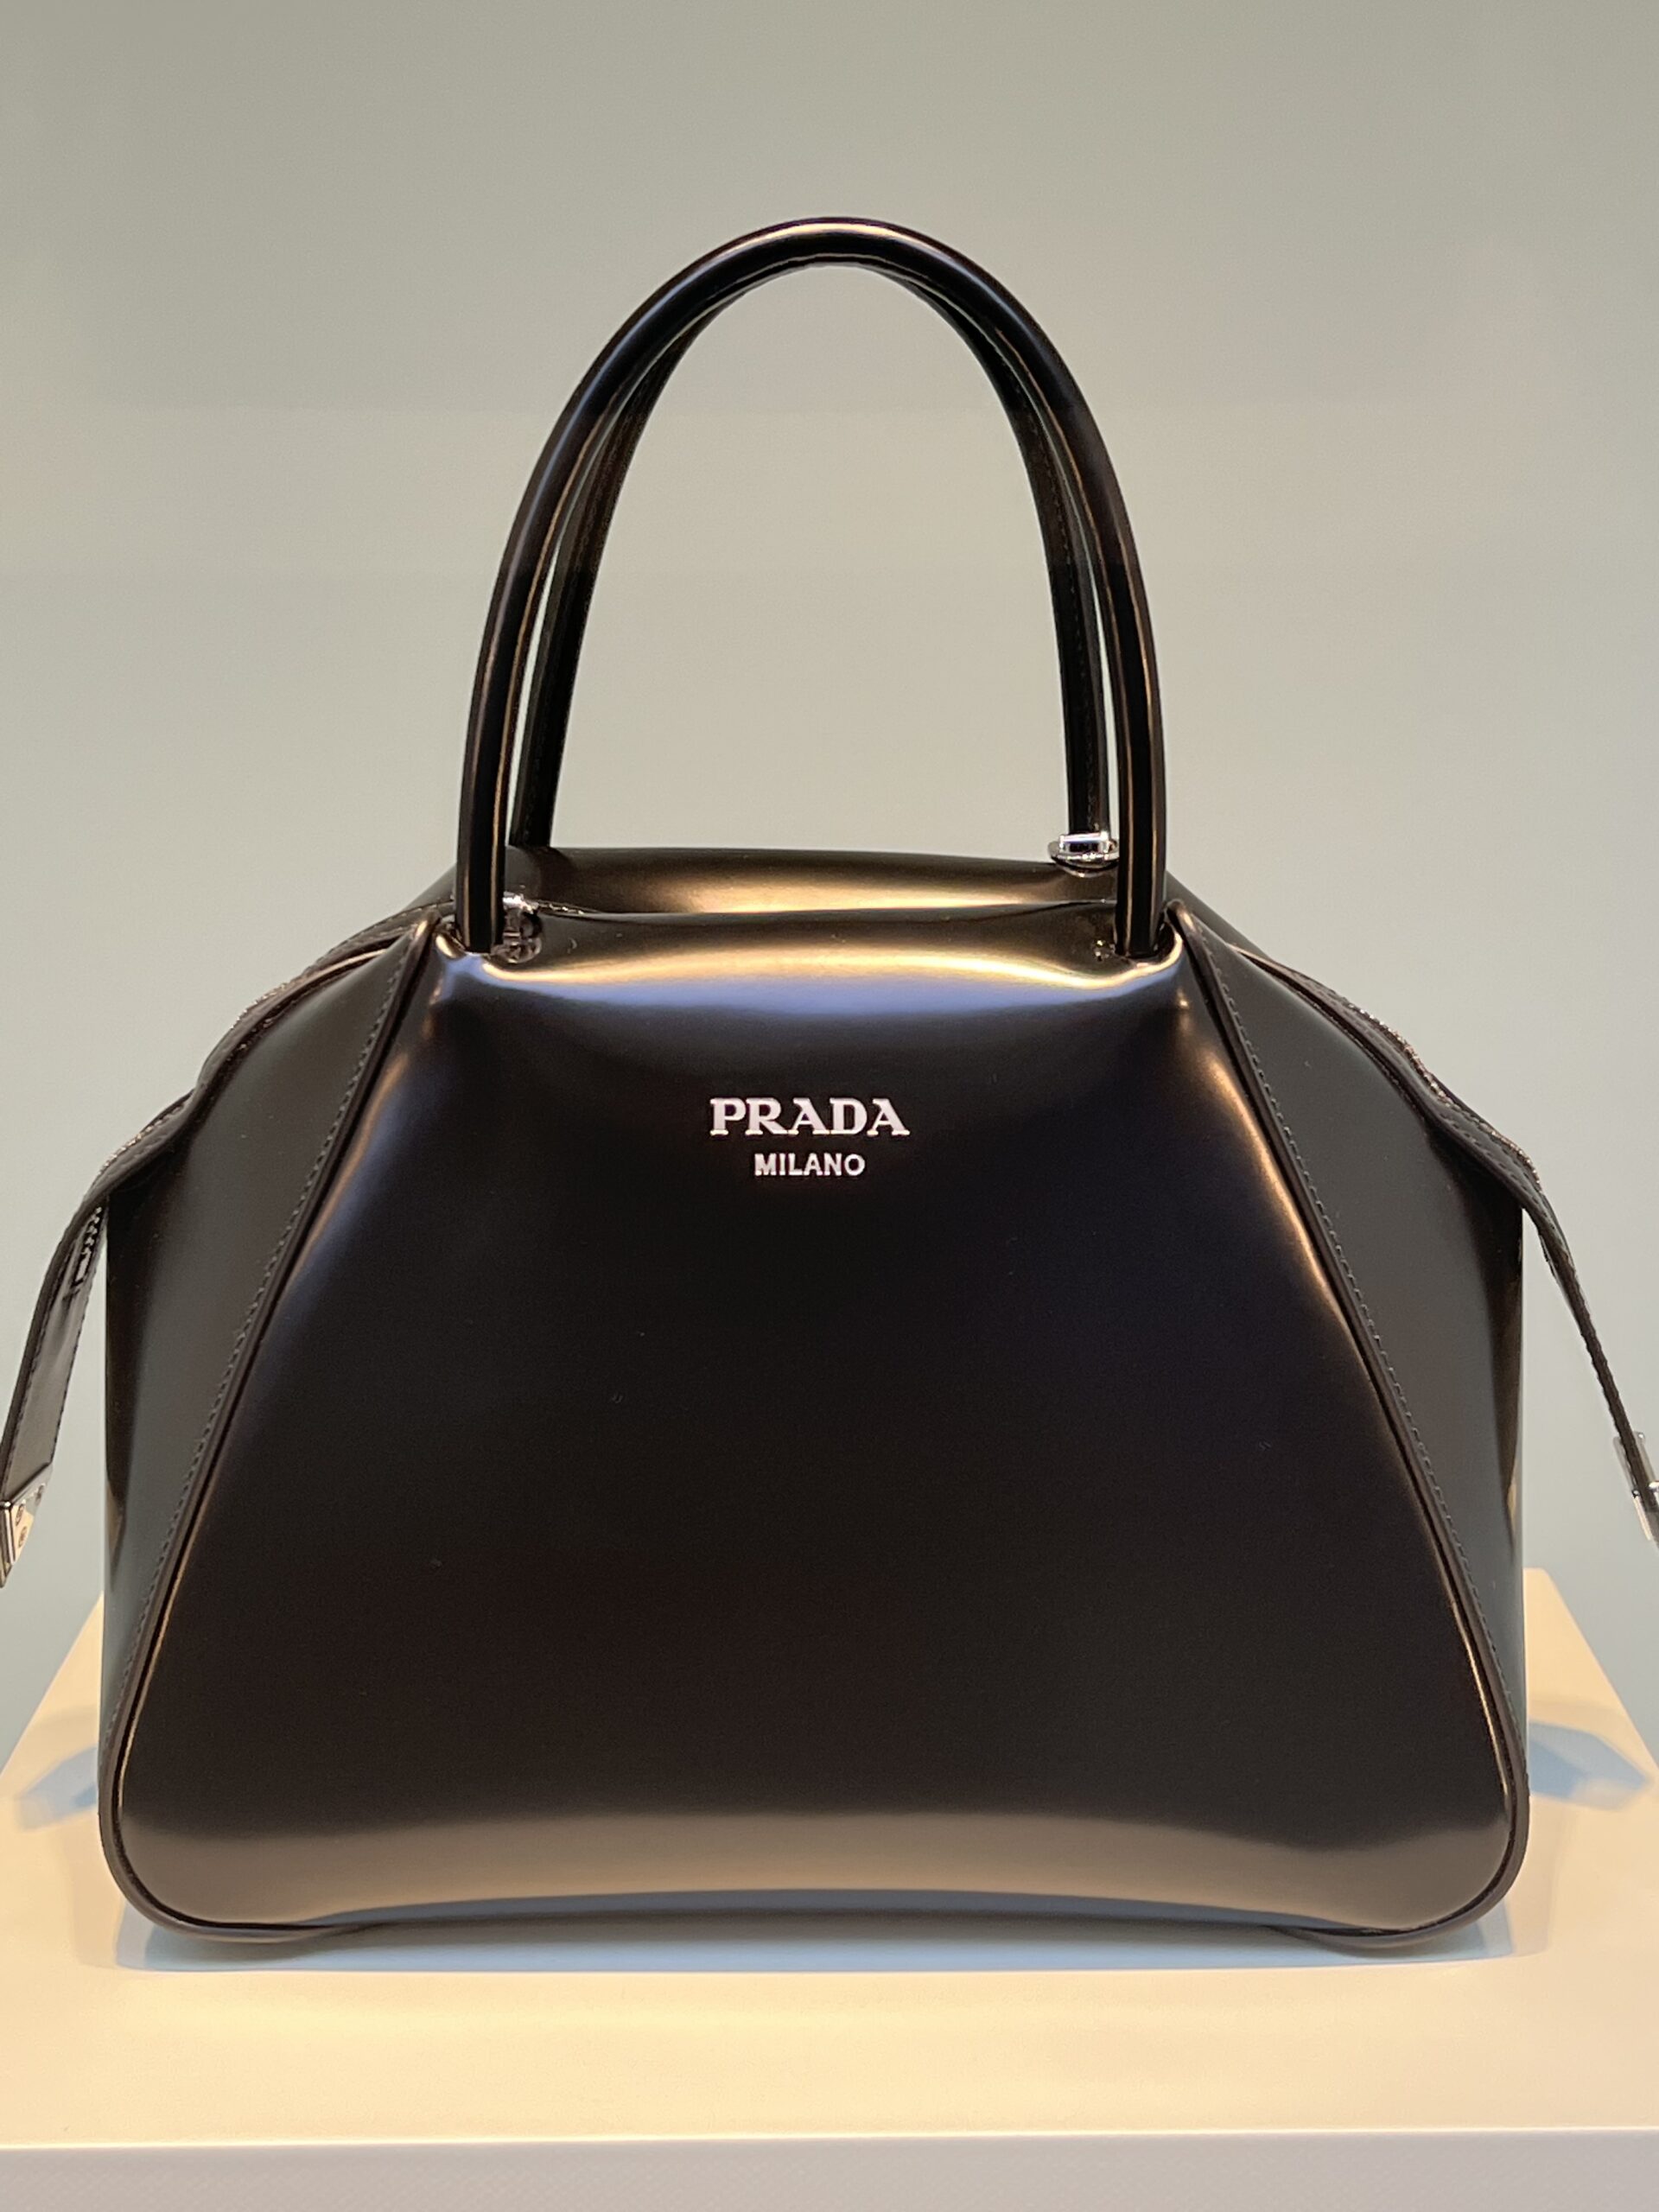 PRADA leather bag